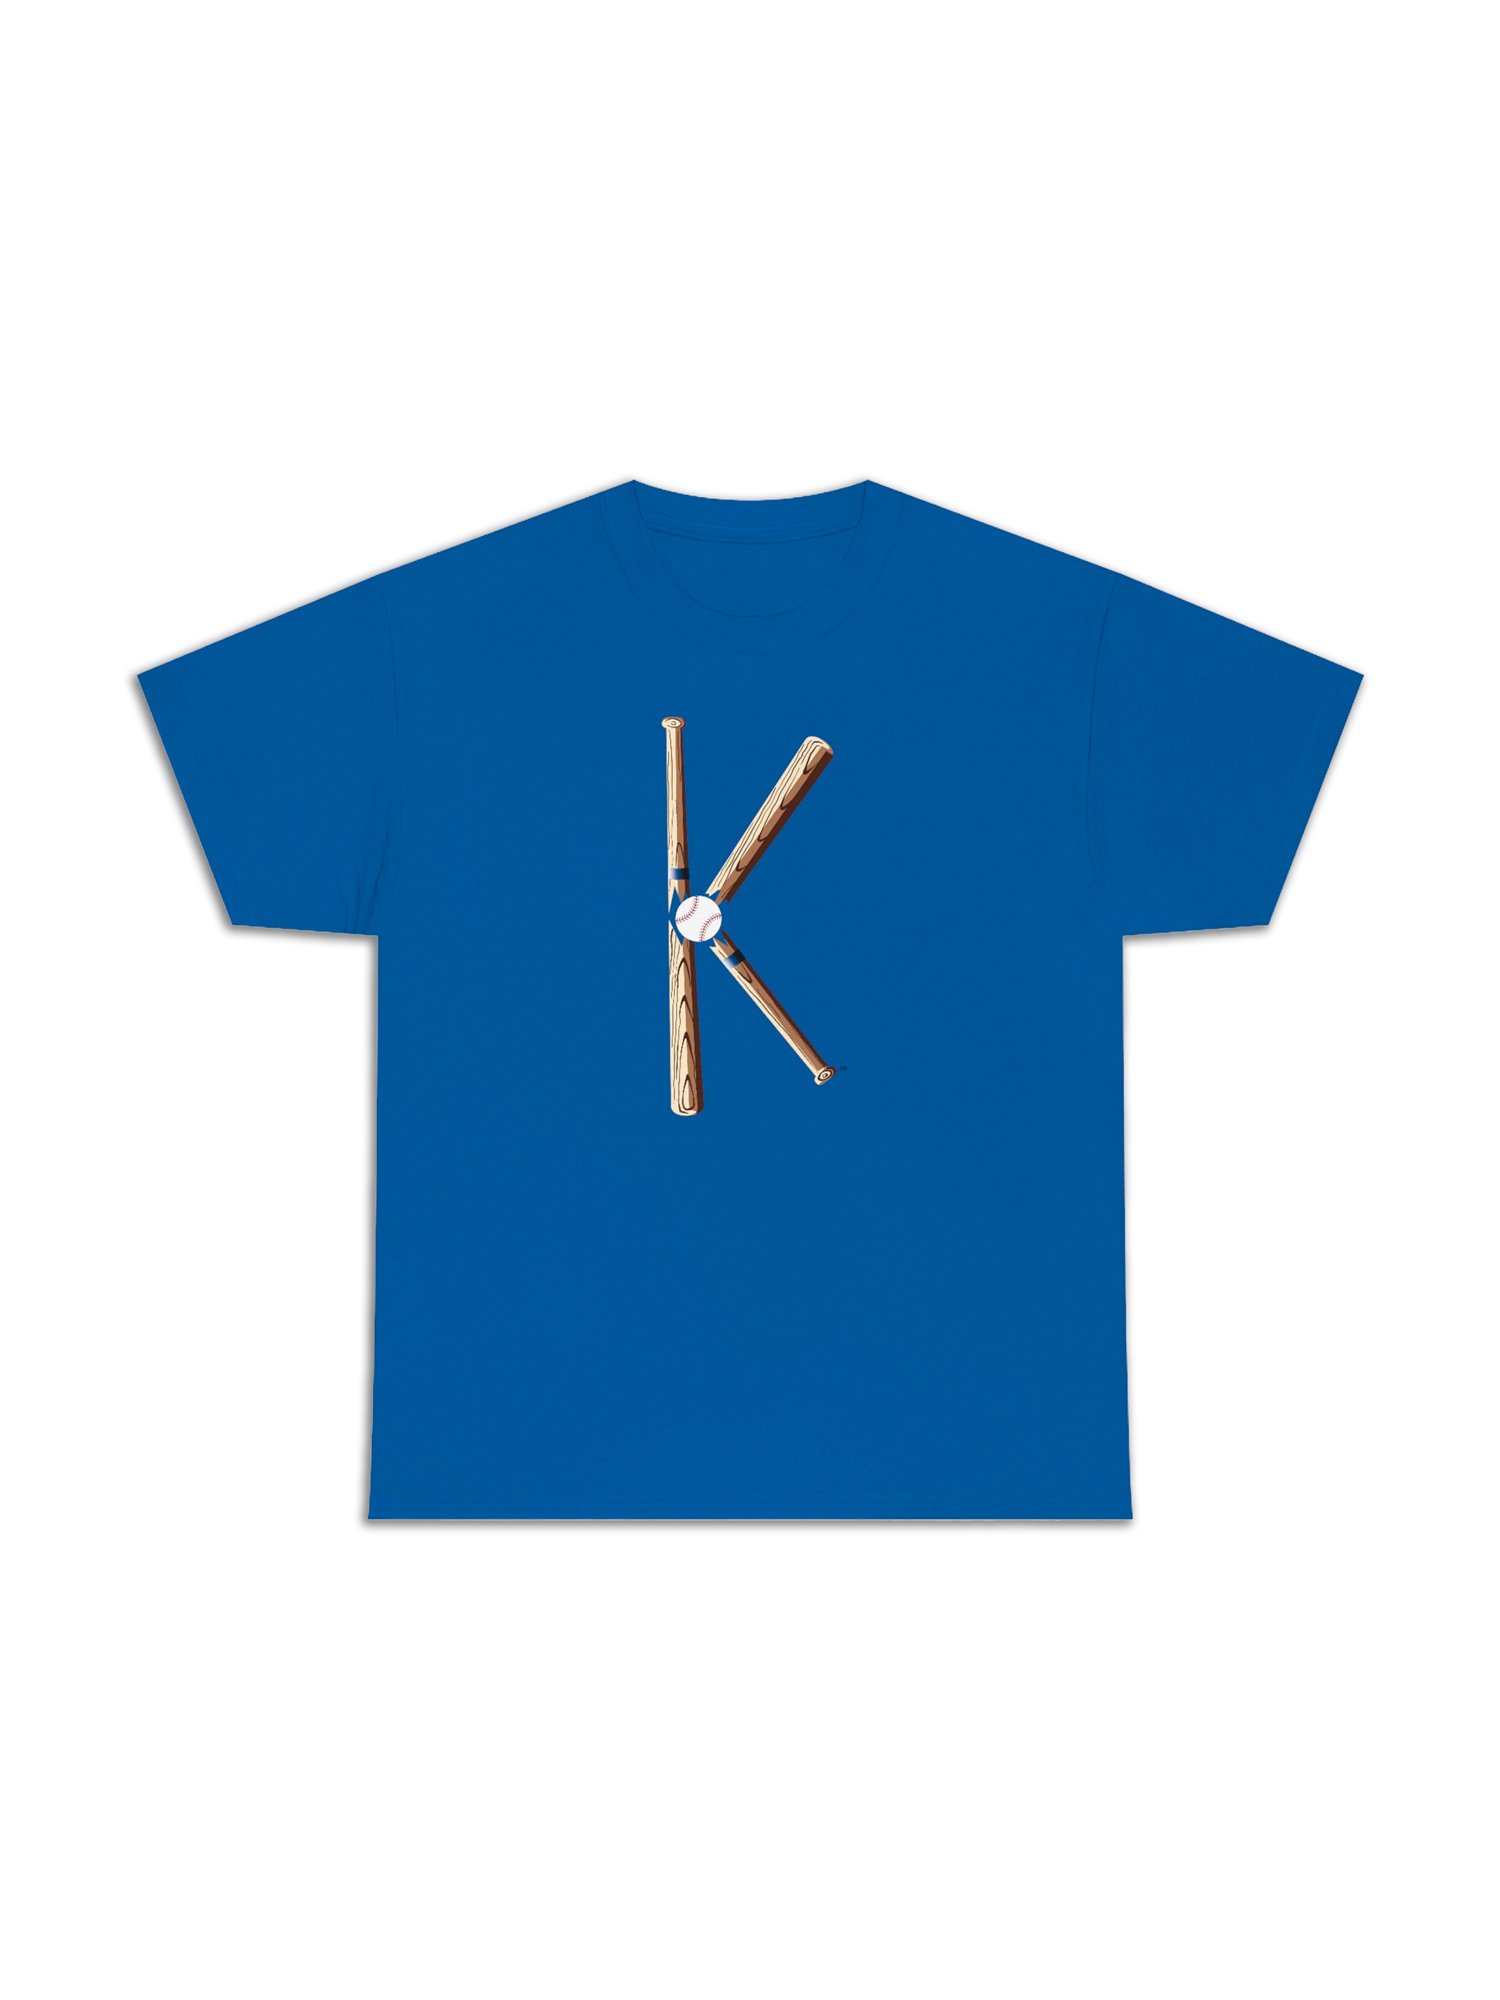 Jake Bujnowski - Original 20 Strikeout K Sign T-Shirt